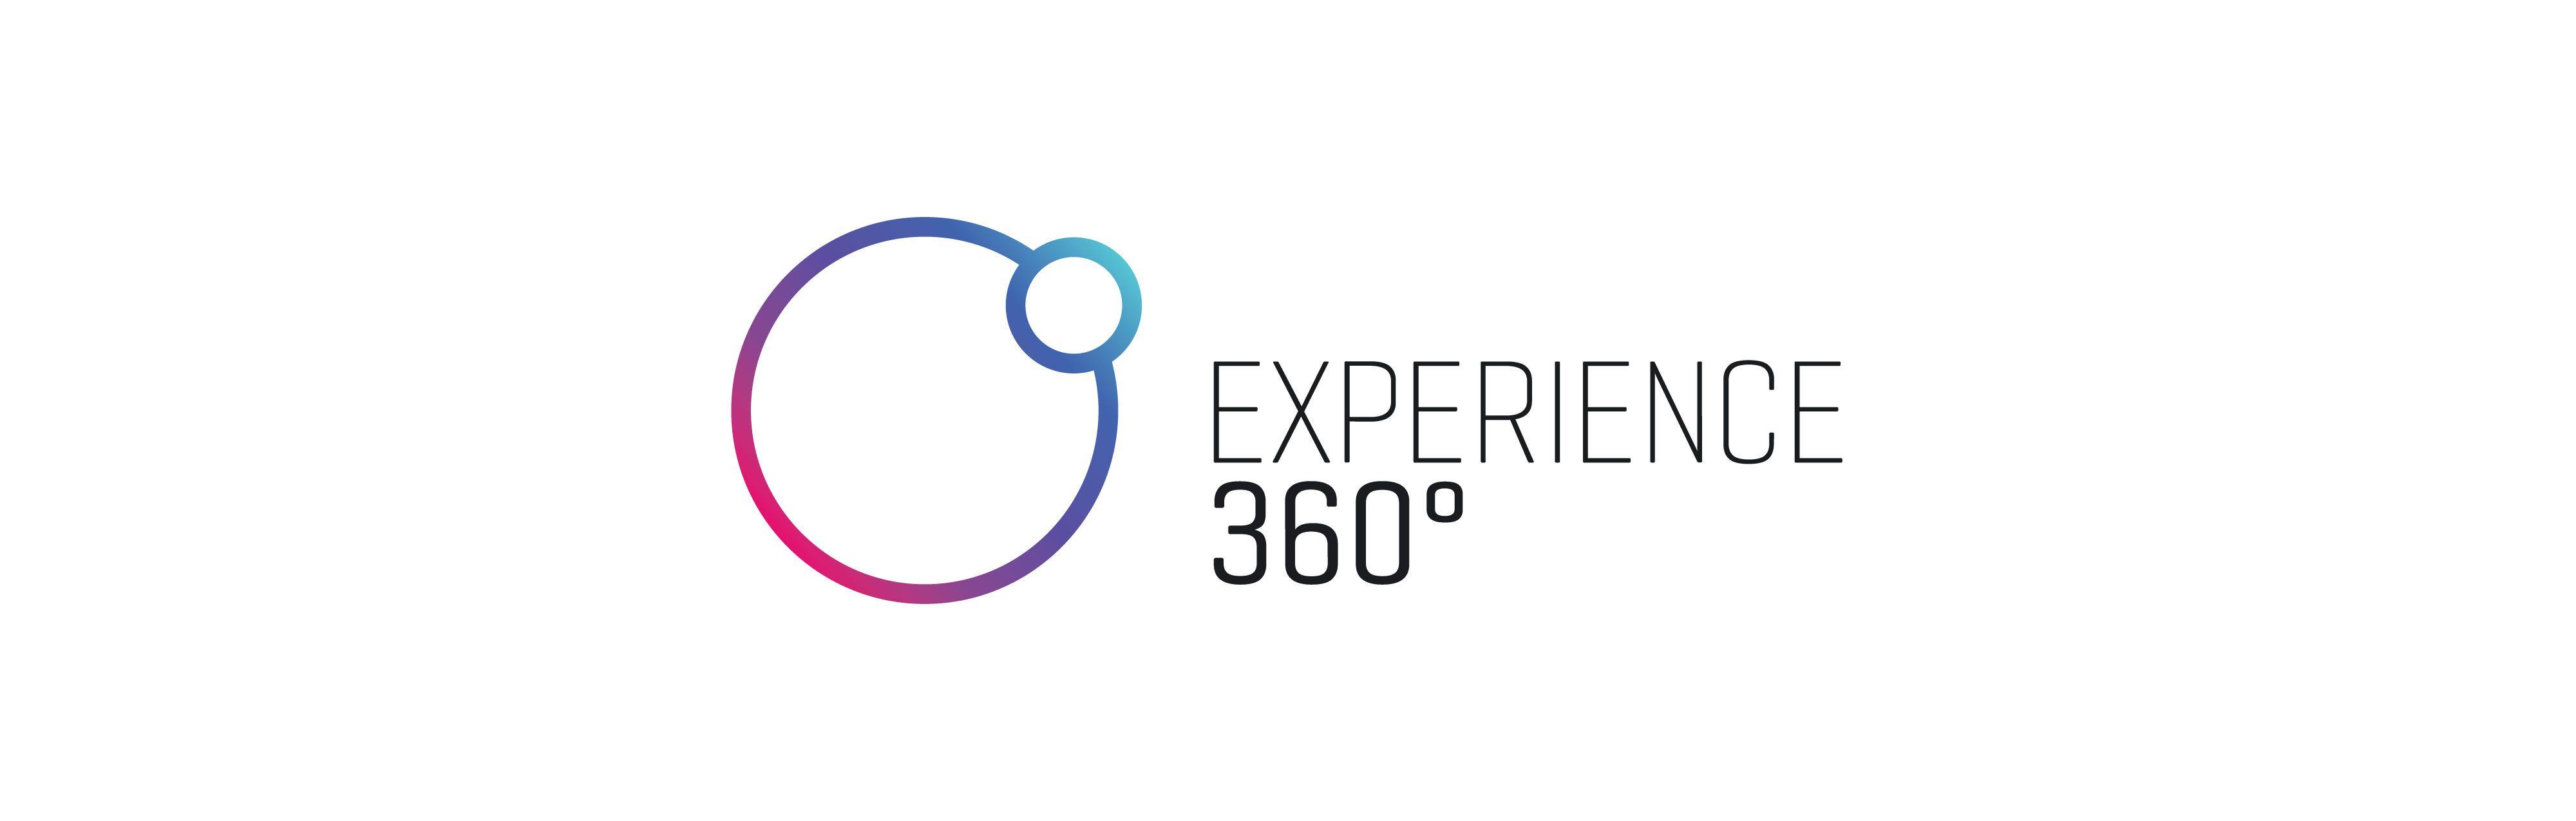 Experience Logo - Experience 360°